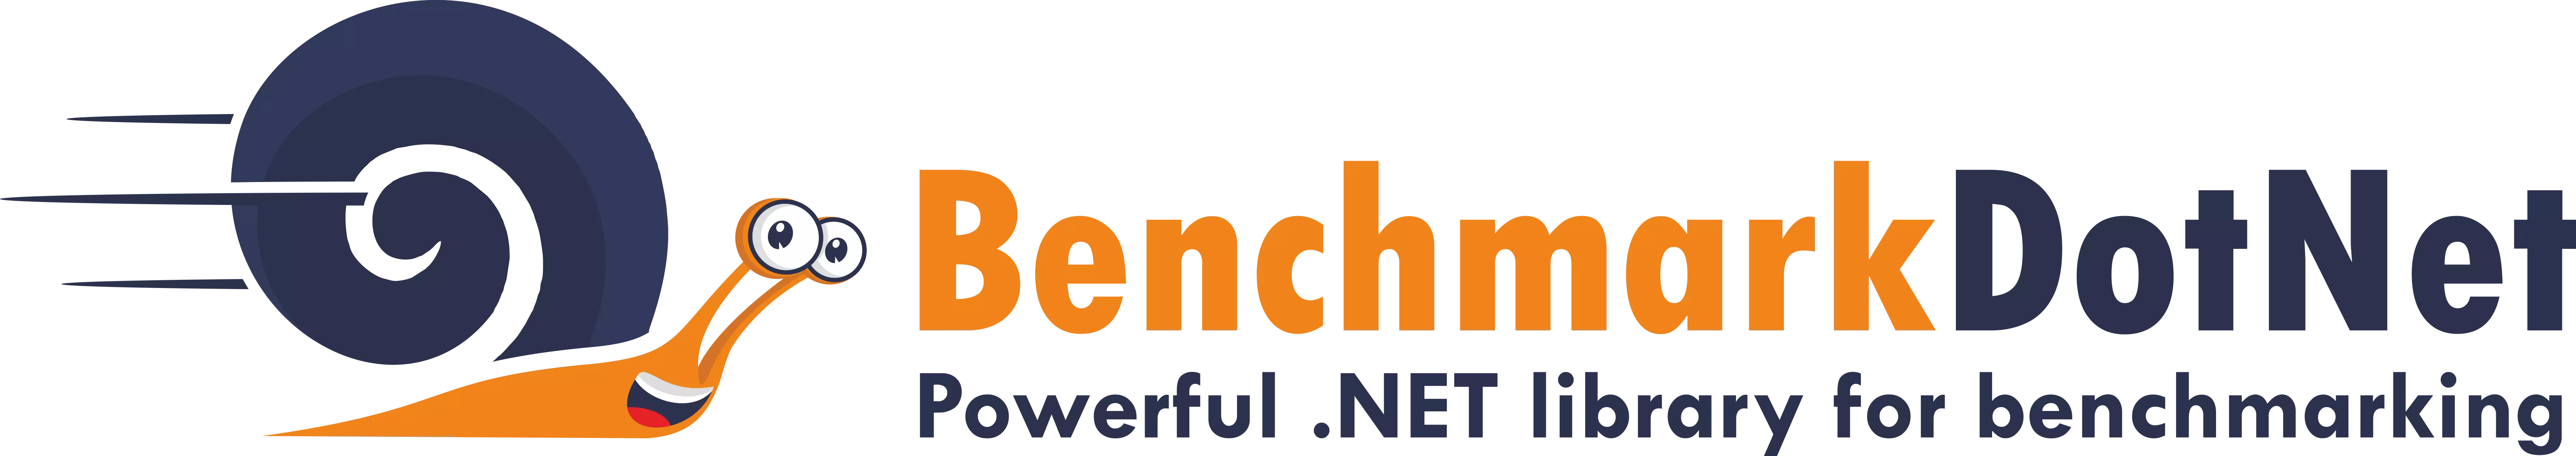 benchmark_dot_net_logo.png